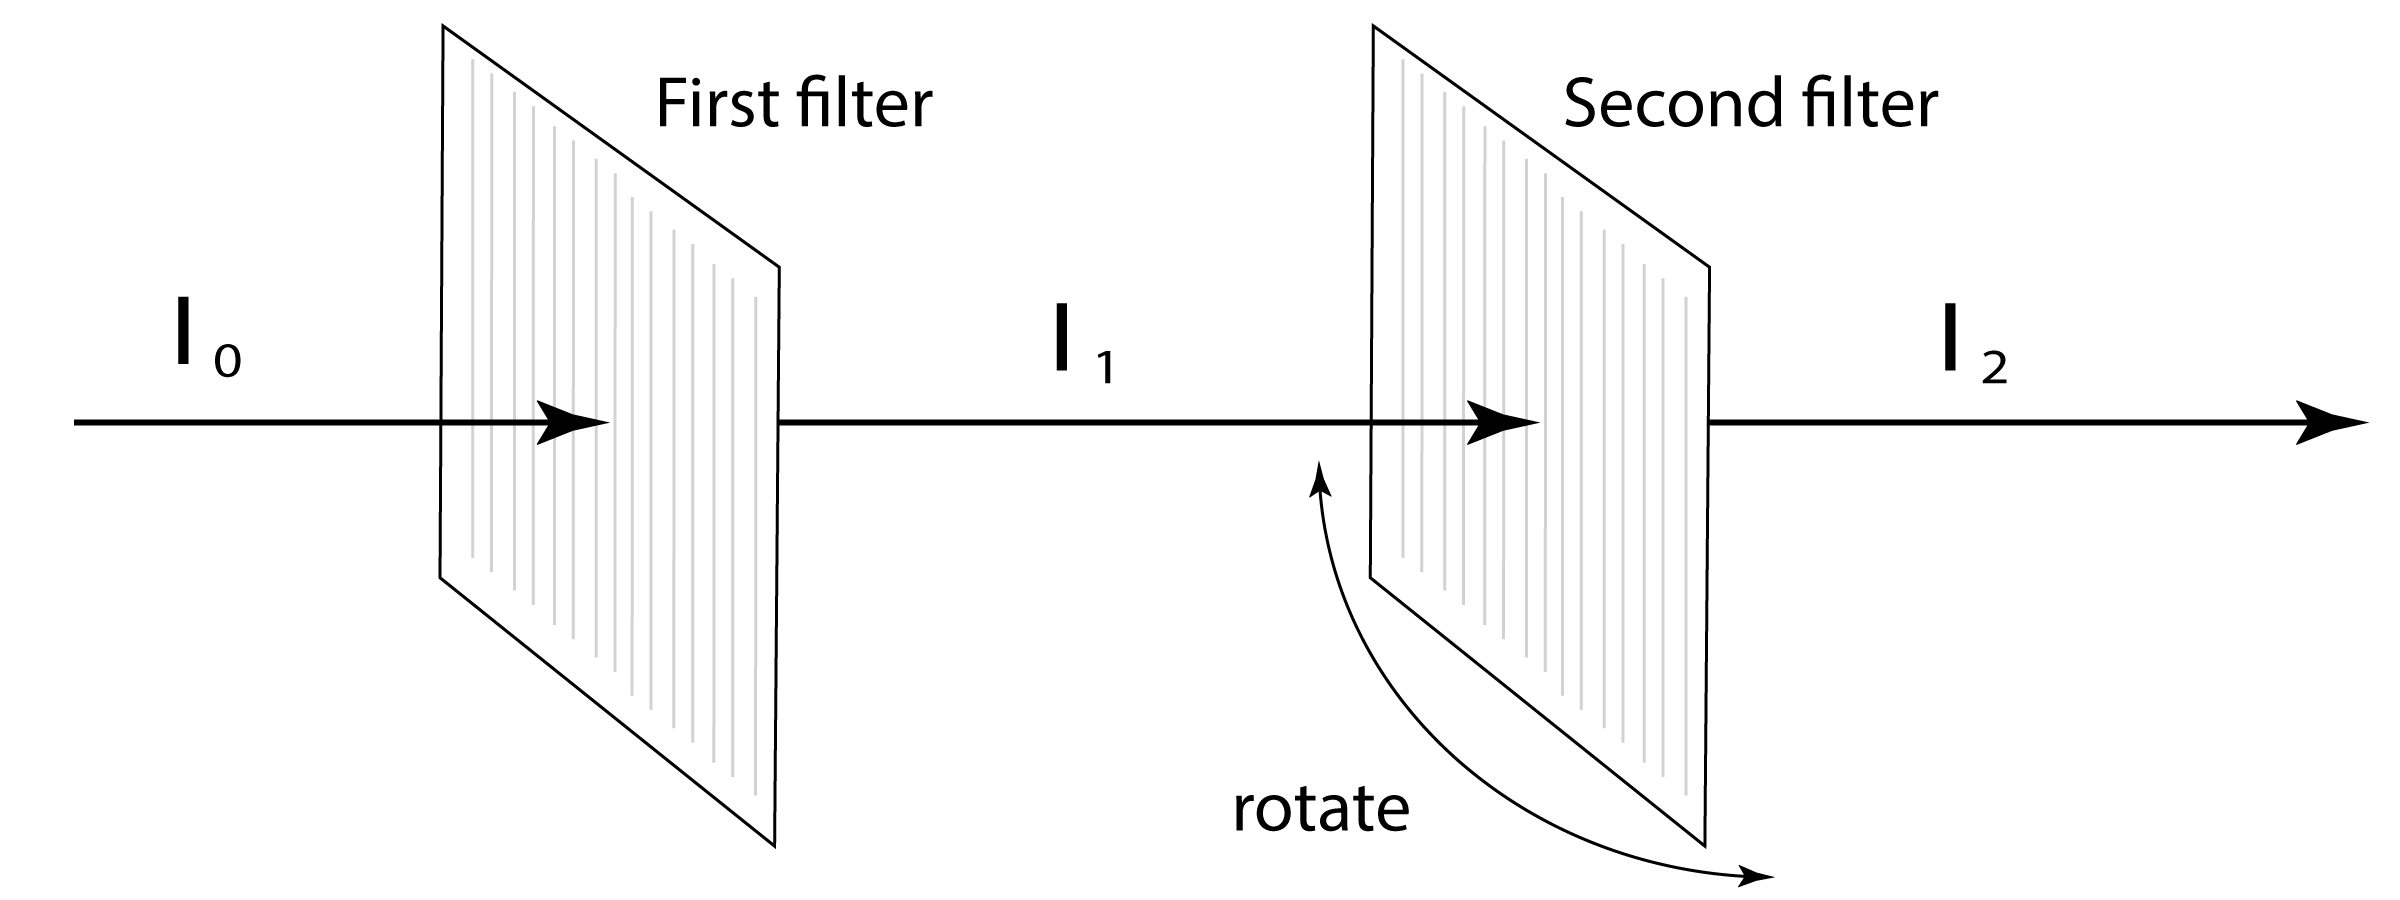 polarisation using 2 filters